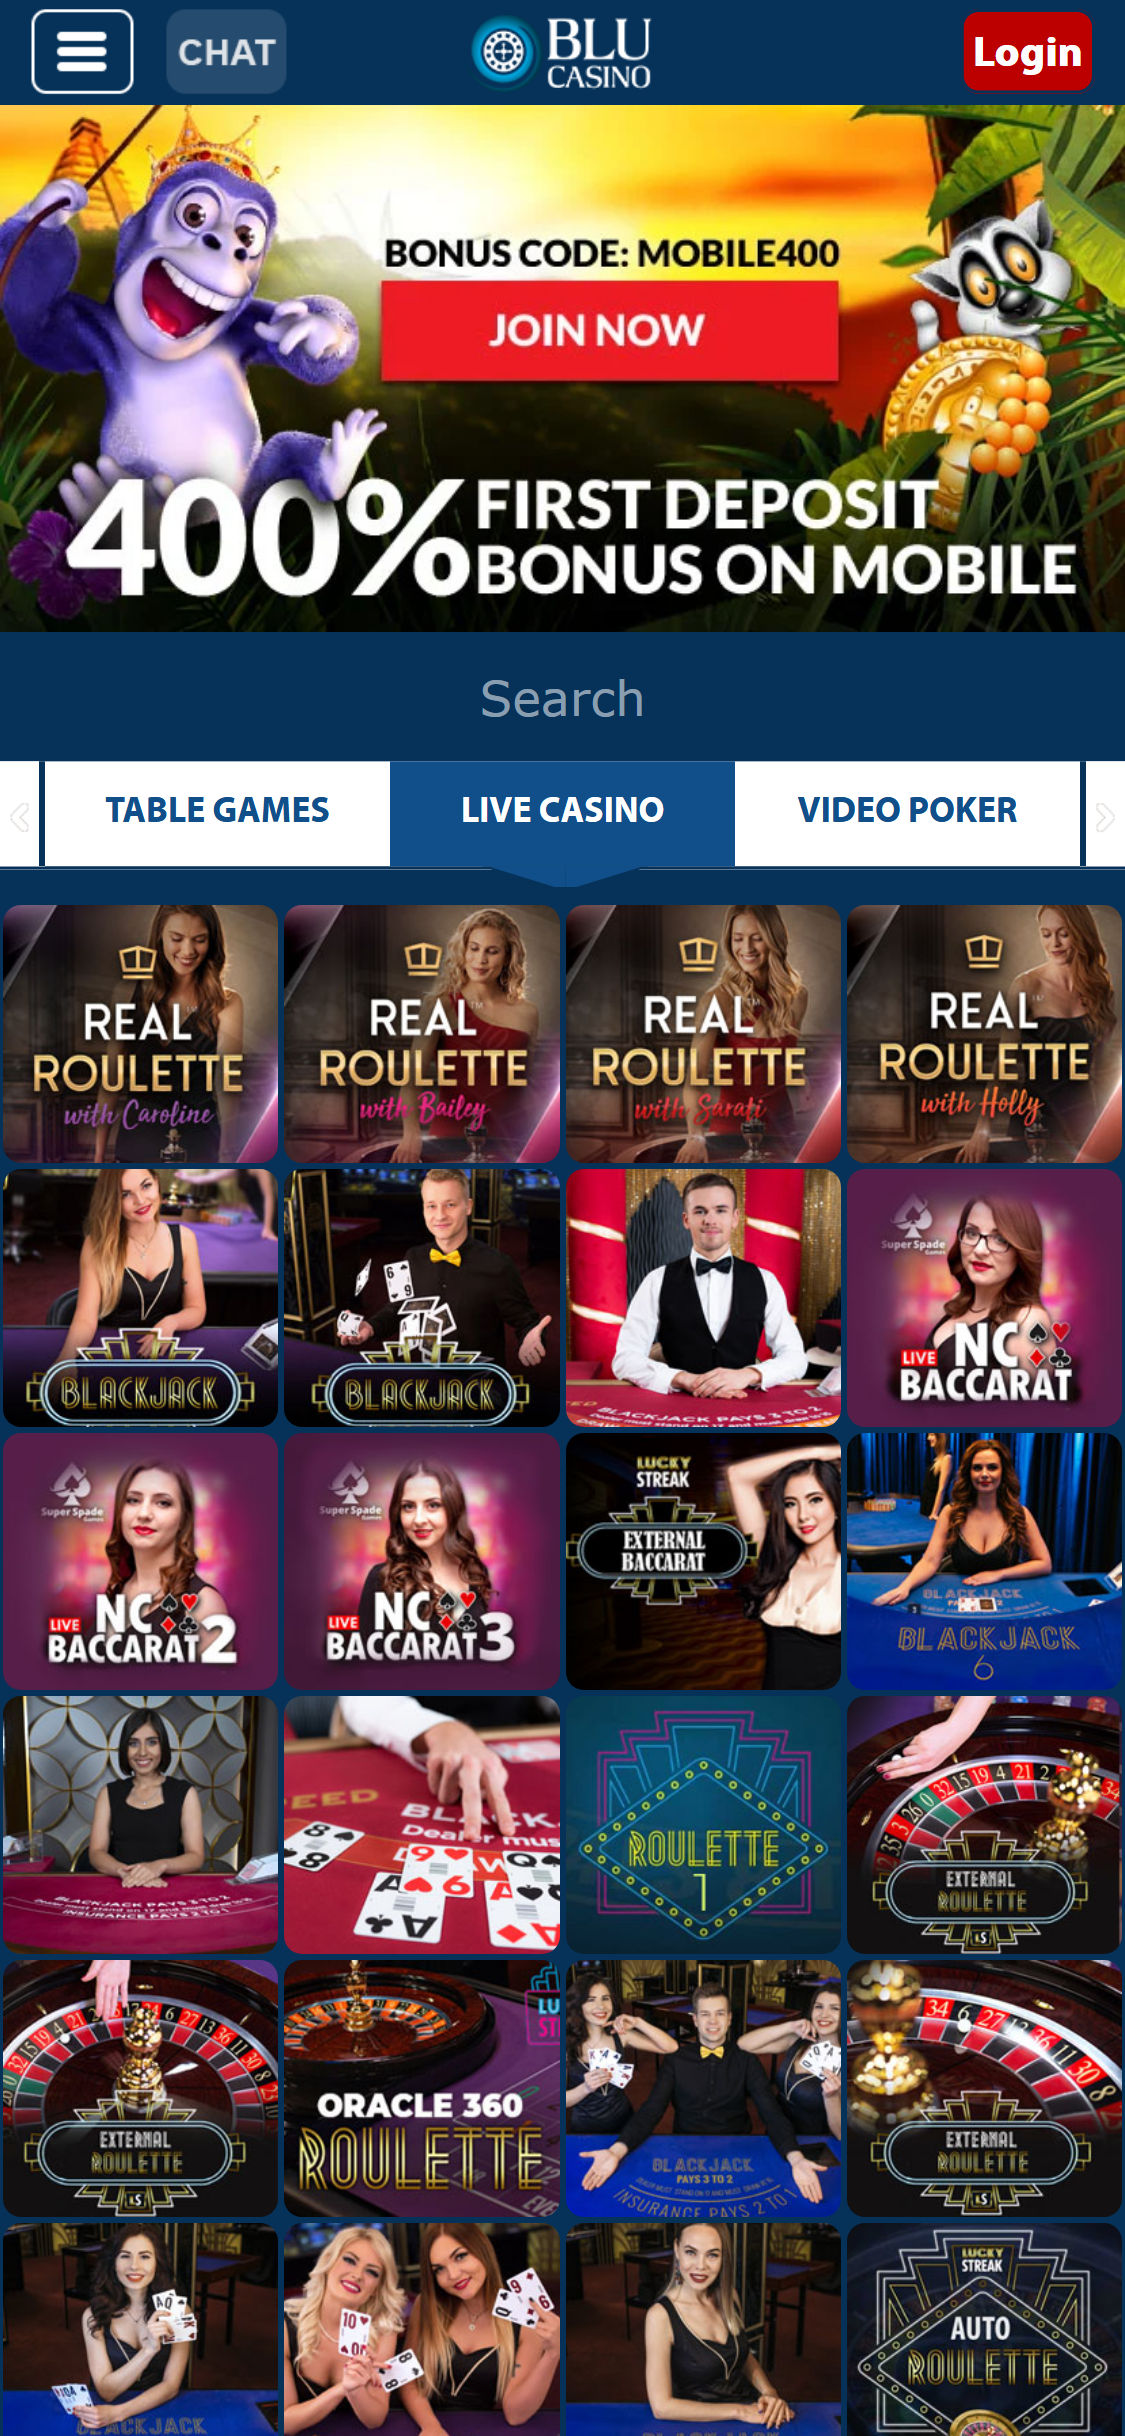 Casino Blu Mobile Live Dealer Games Review